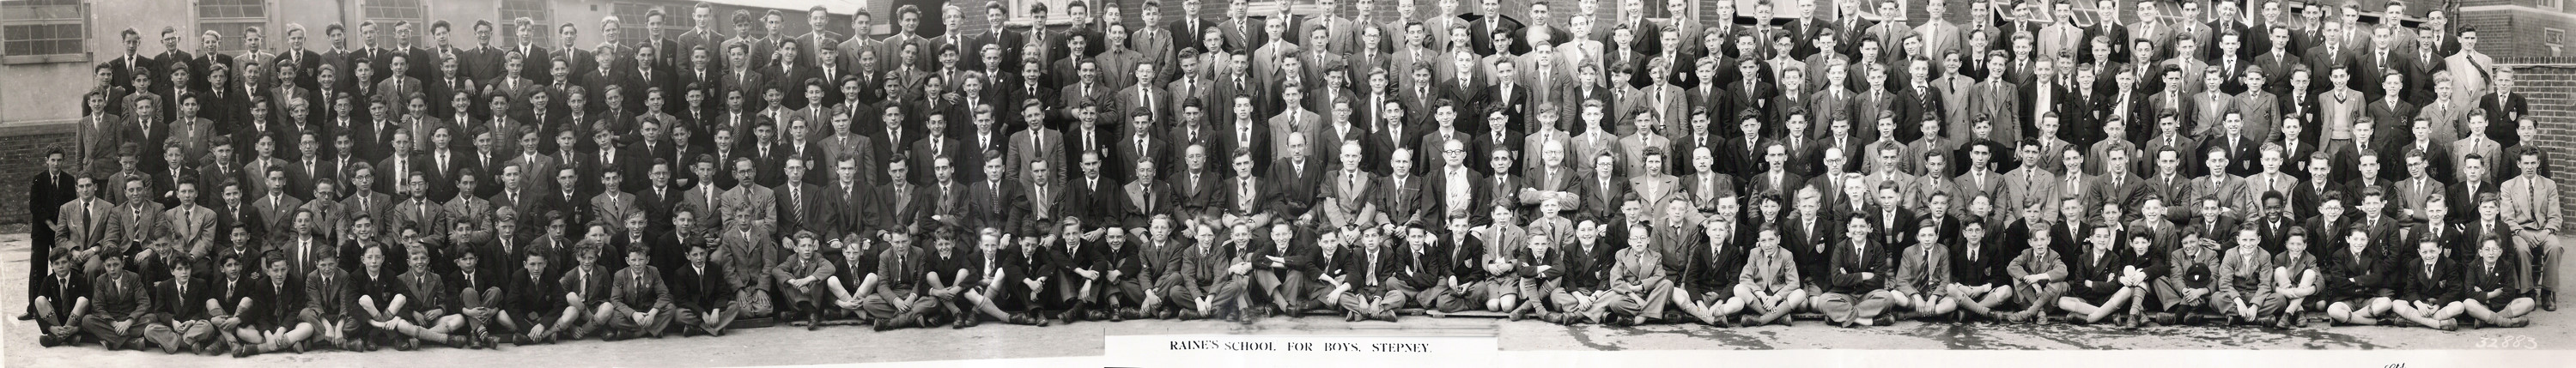  Old Raineians Association School Photograph (Boys) 1950